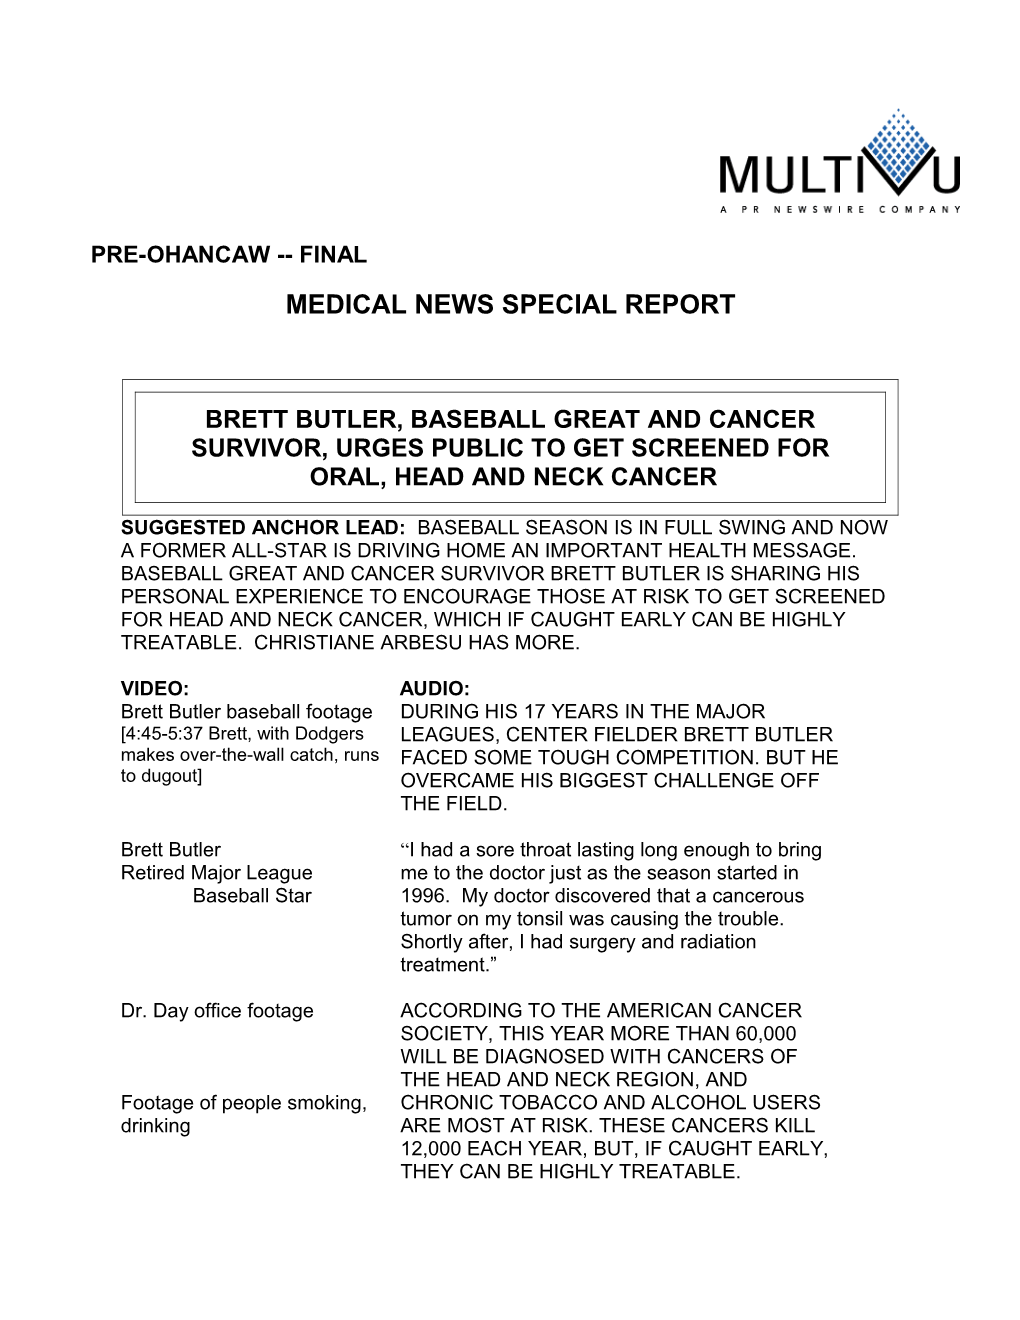 Medical News Special Report